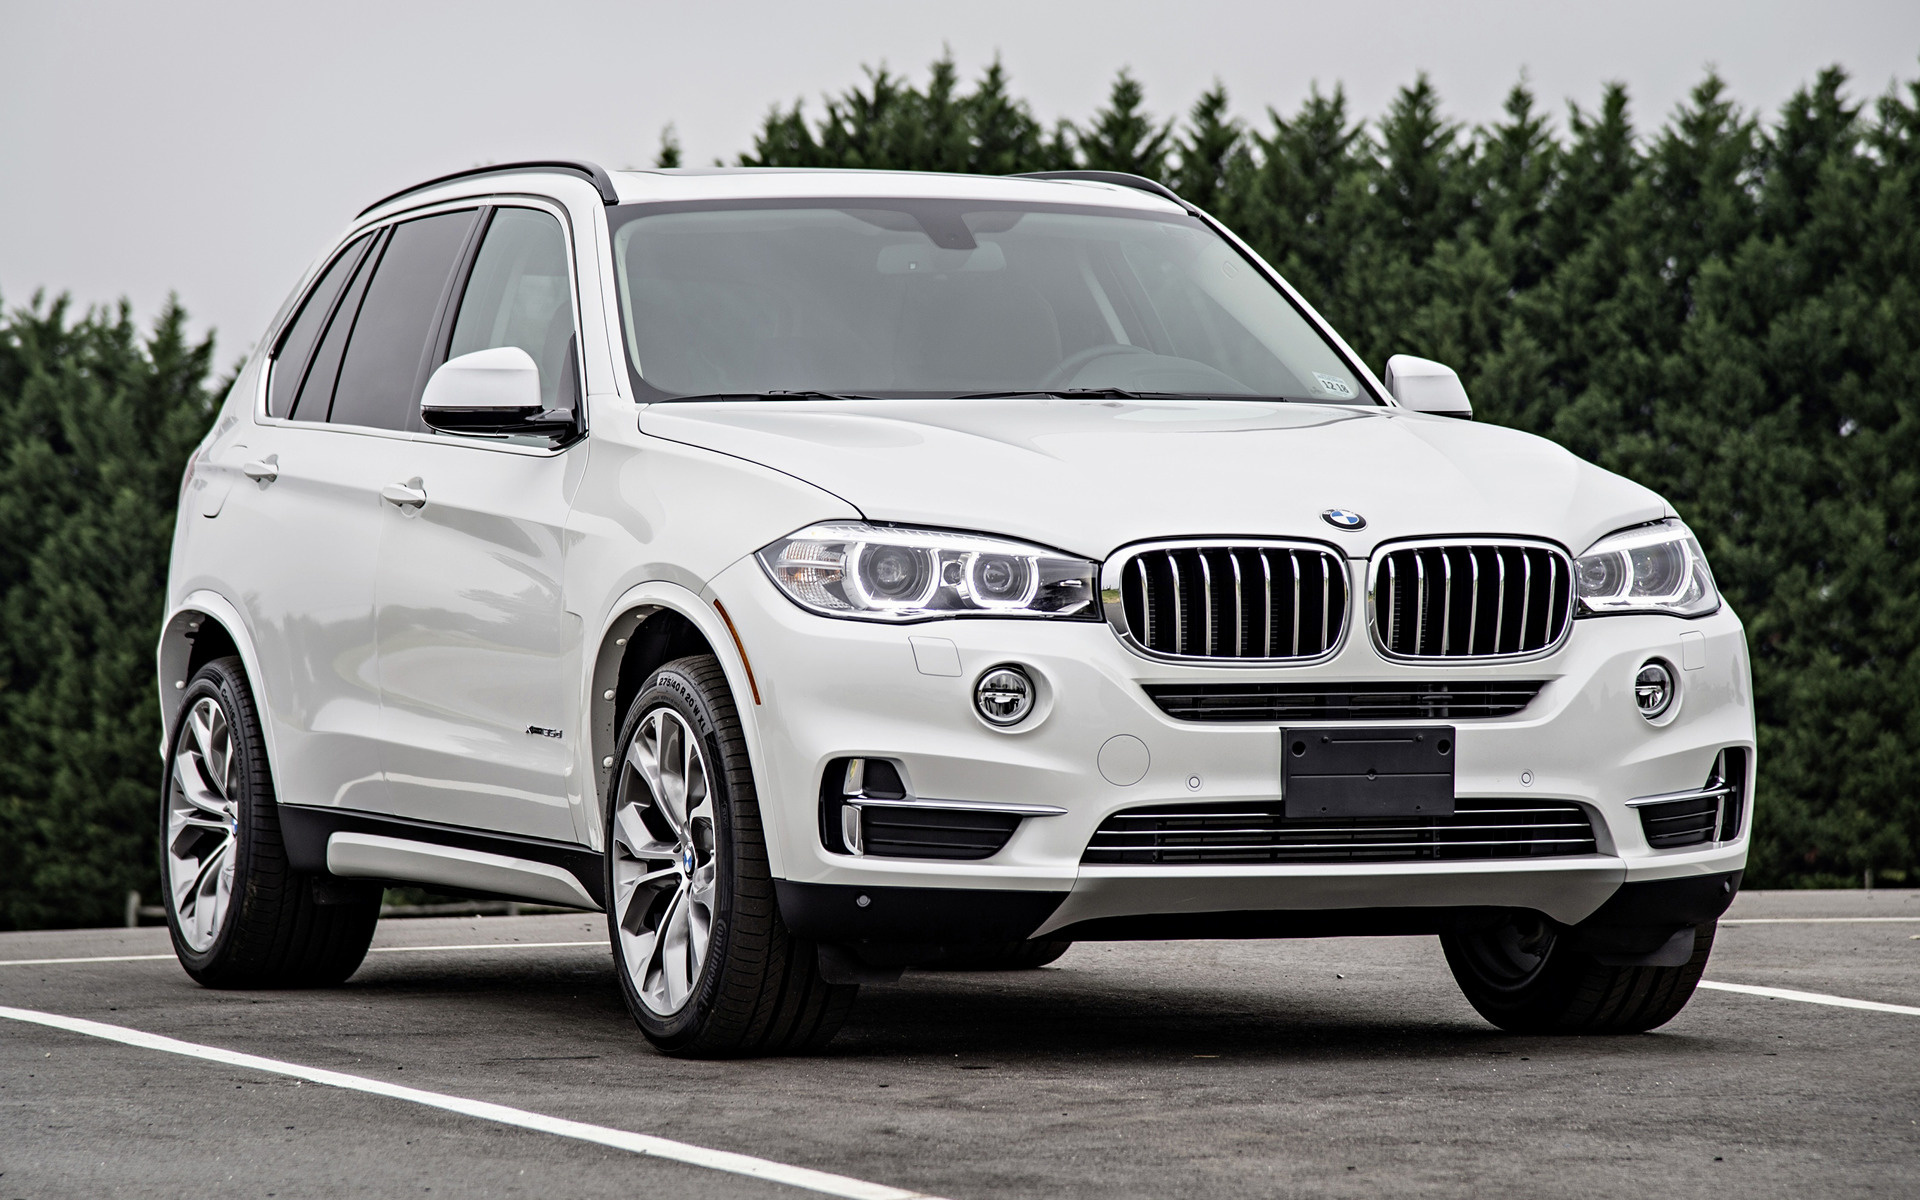 BMW X5 2014, US wallpapers, Premium SUV, German engineering excellence, 1920x1200 HD Desktop